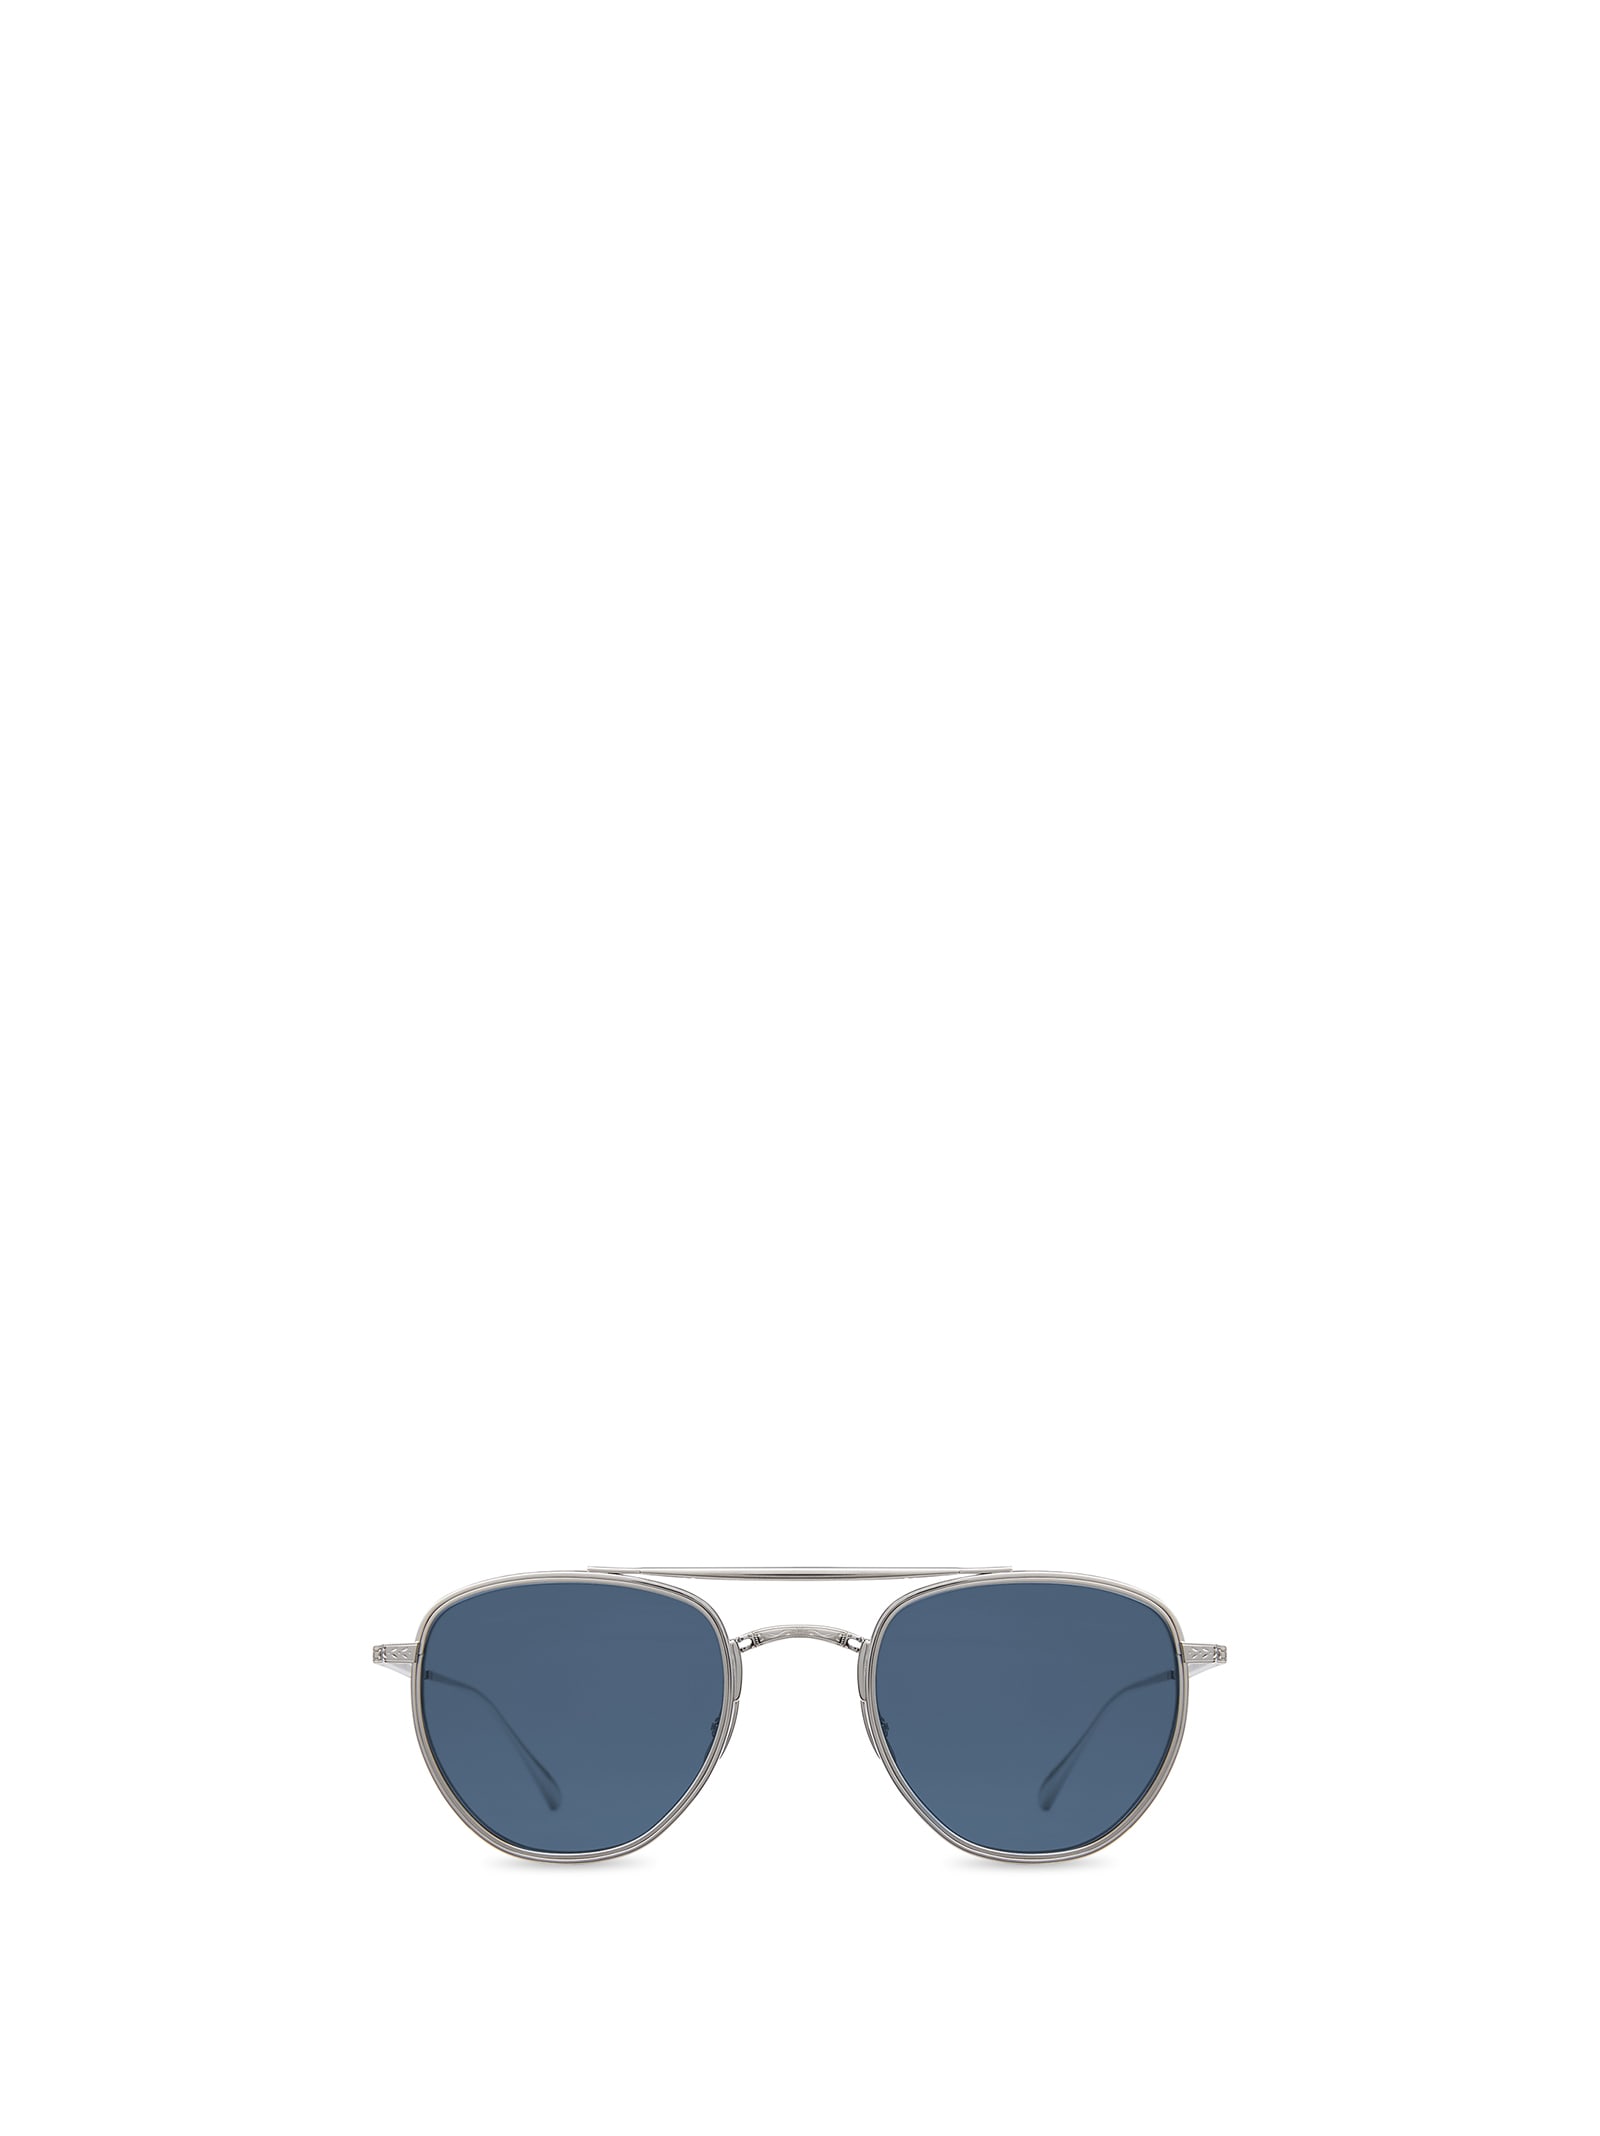 Roku Ii S Platinum Sunglasses